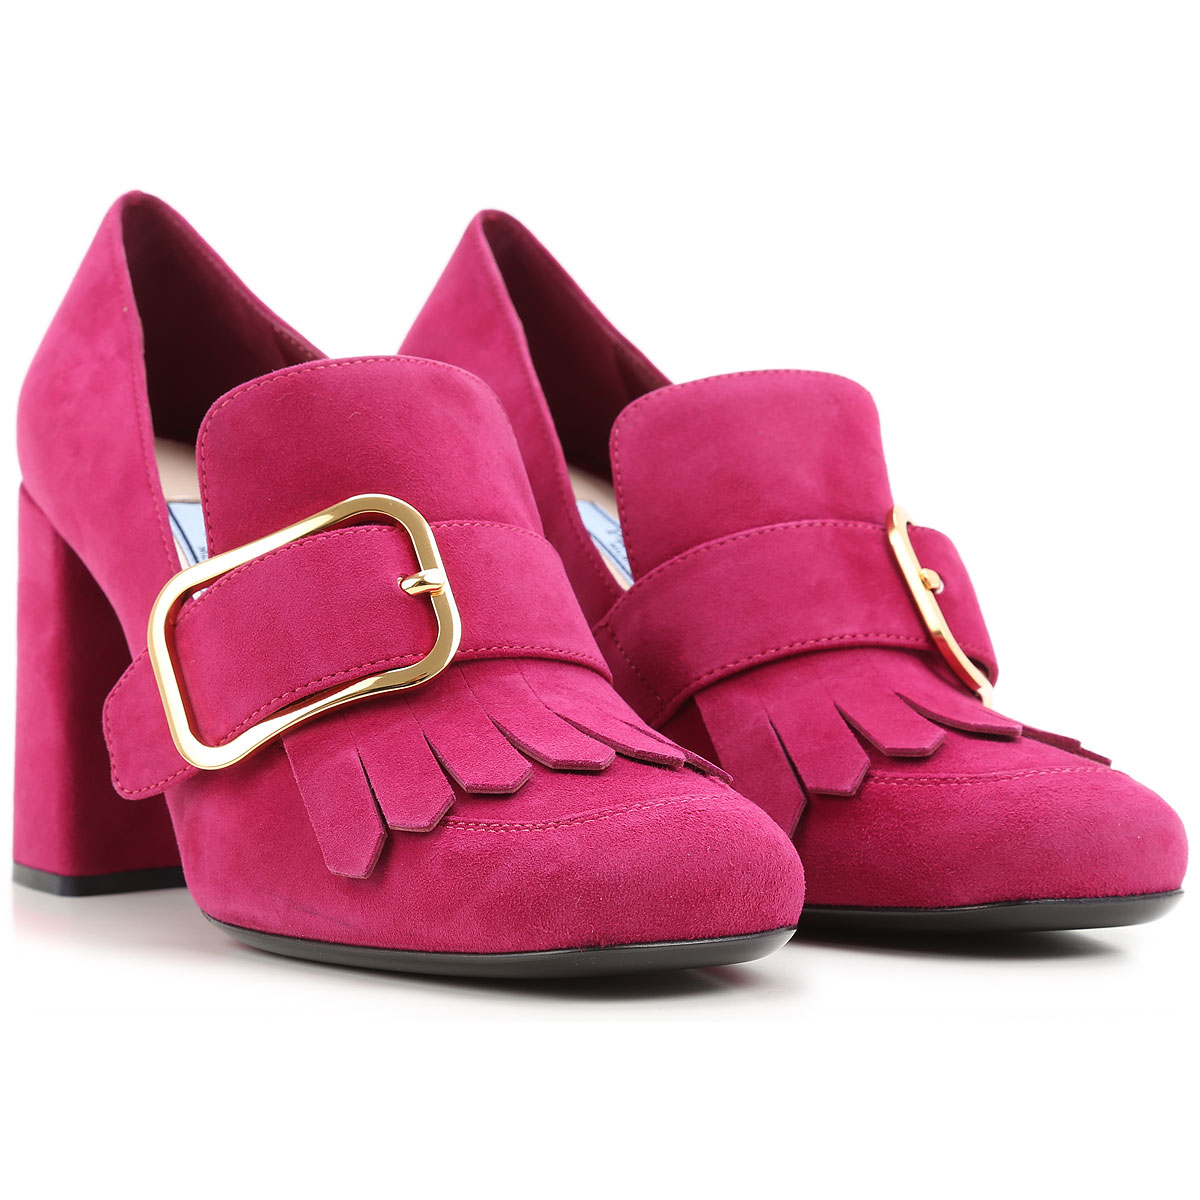 Womens Shoes Prada, Style code: 1d046h-008-f027x